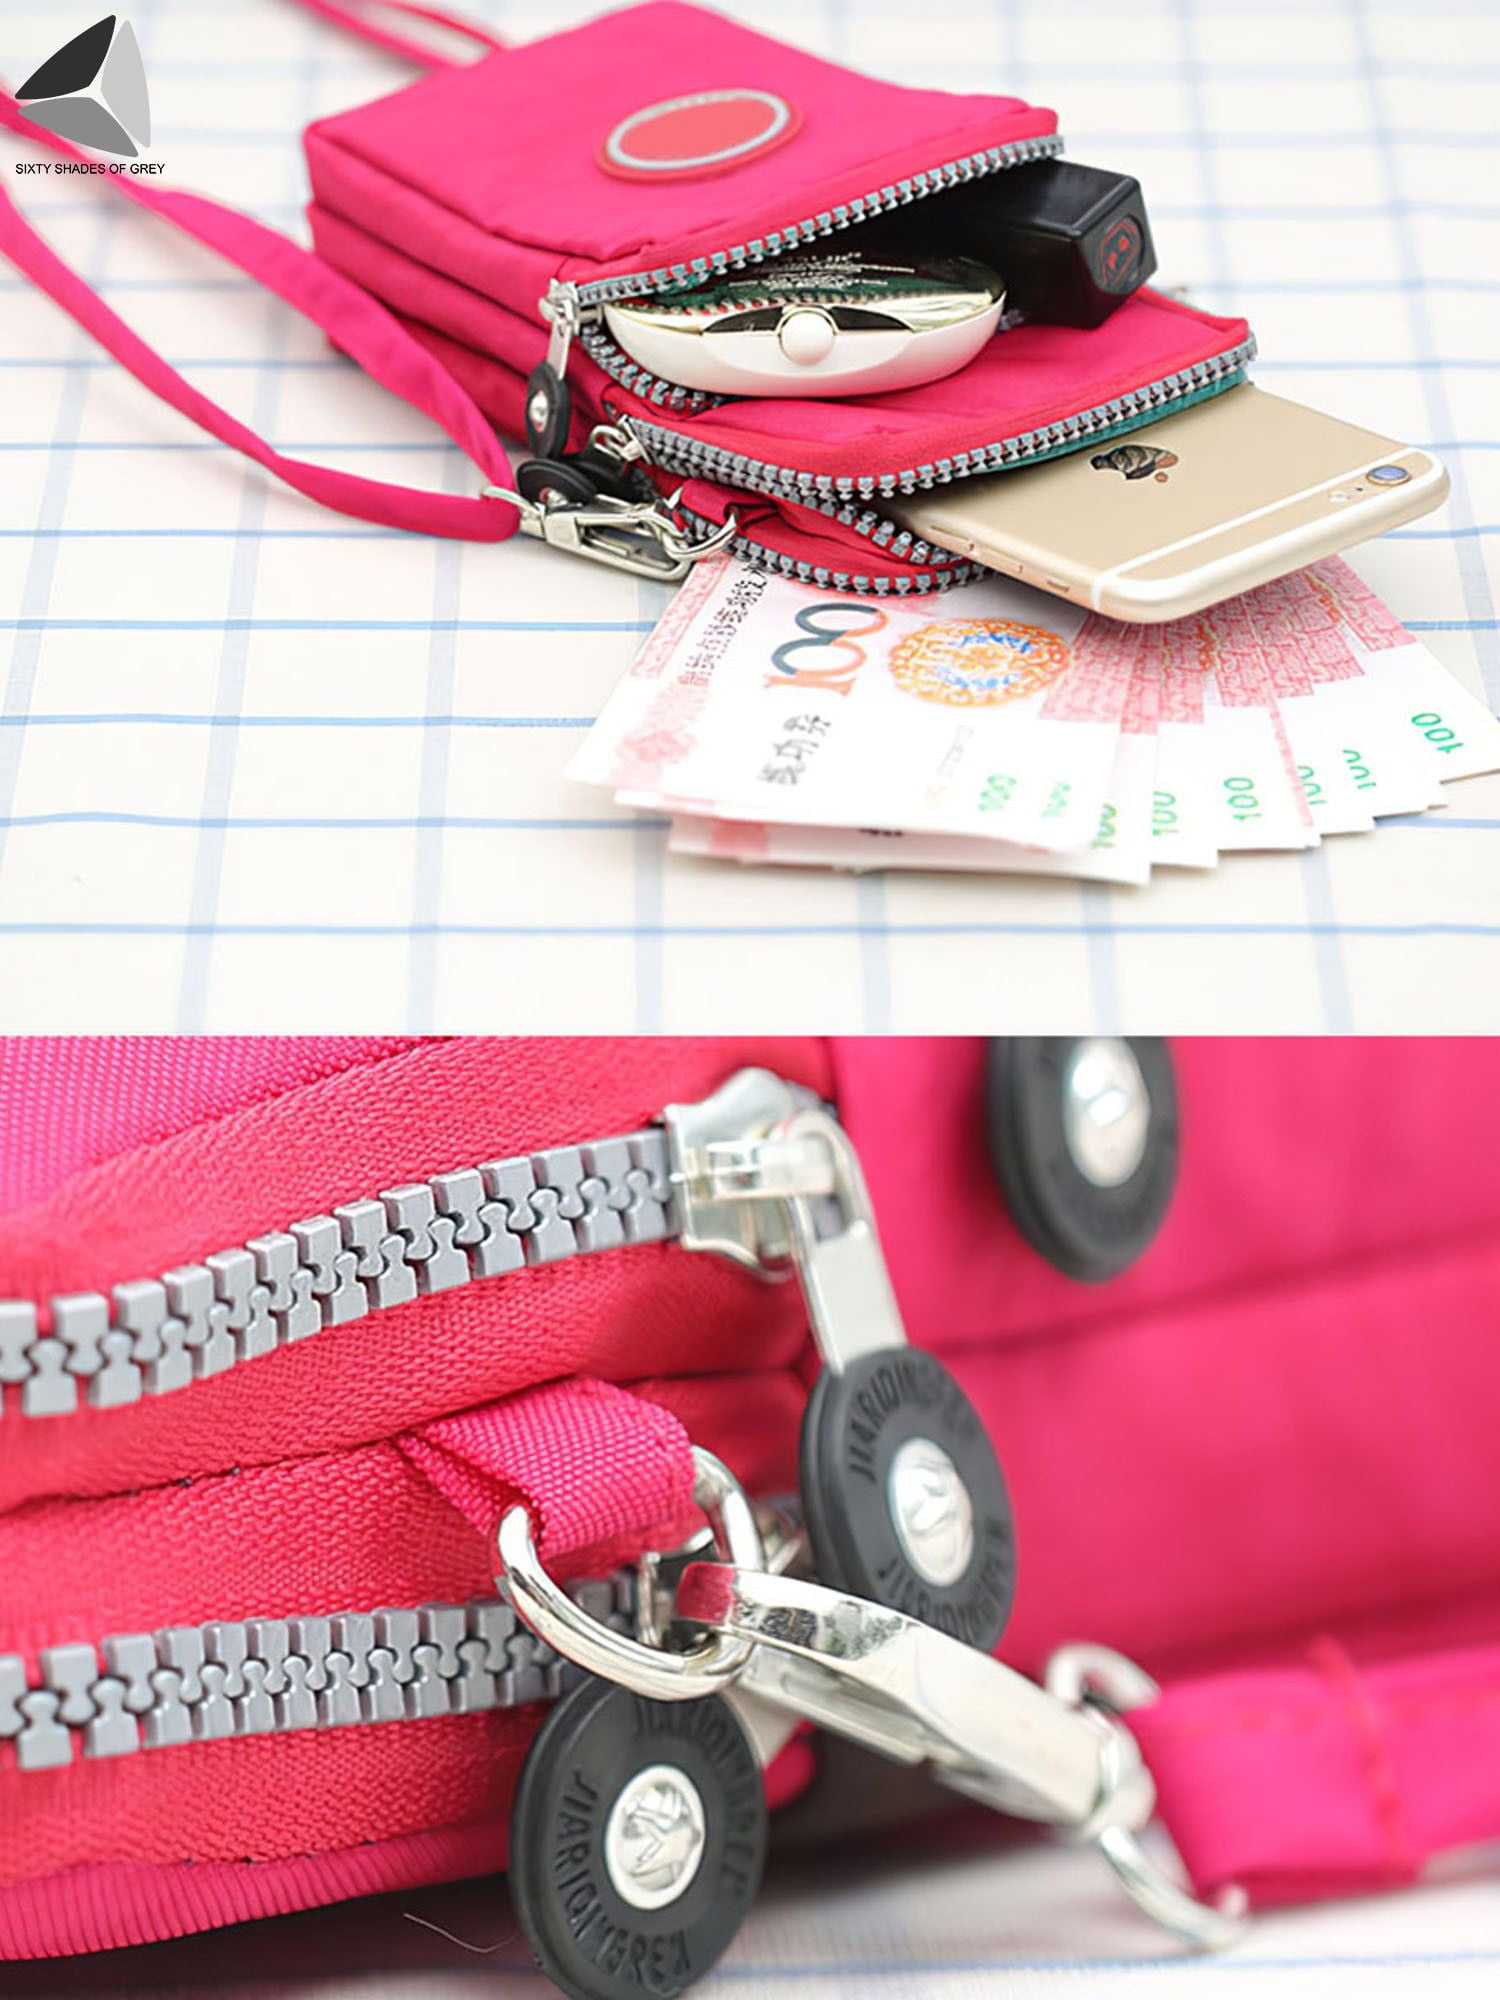 PULLIMORE Womens Small Crossbody Phone Bag Water Resistant Nylon Zipper  Shoulder Bag Purse Wallet For Sport Shopping Travel (Black) 